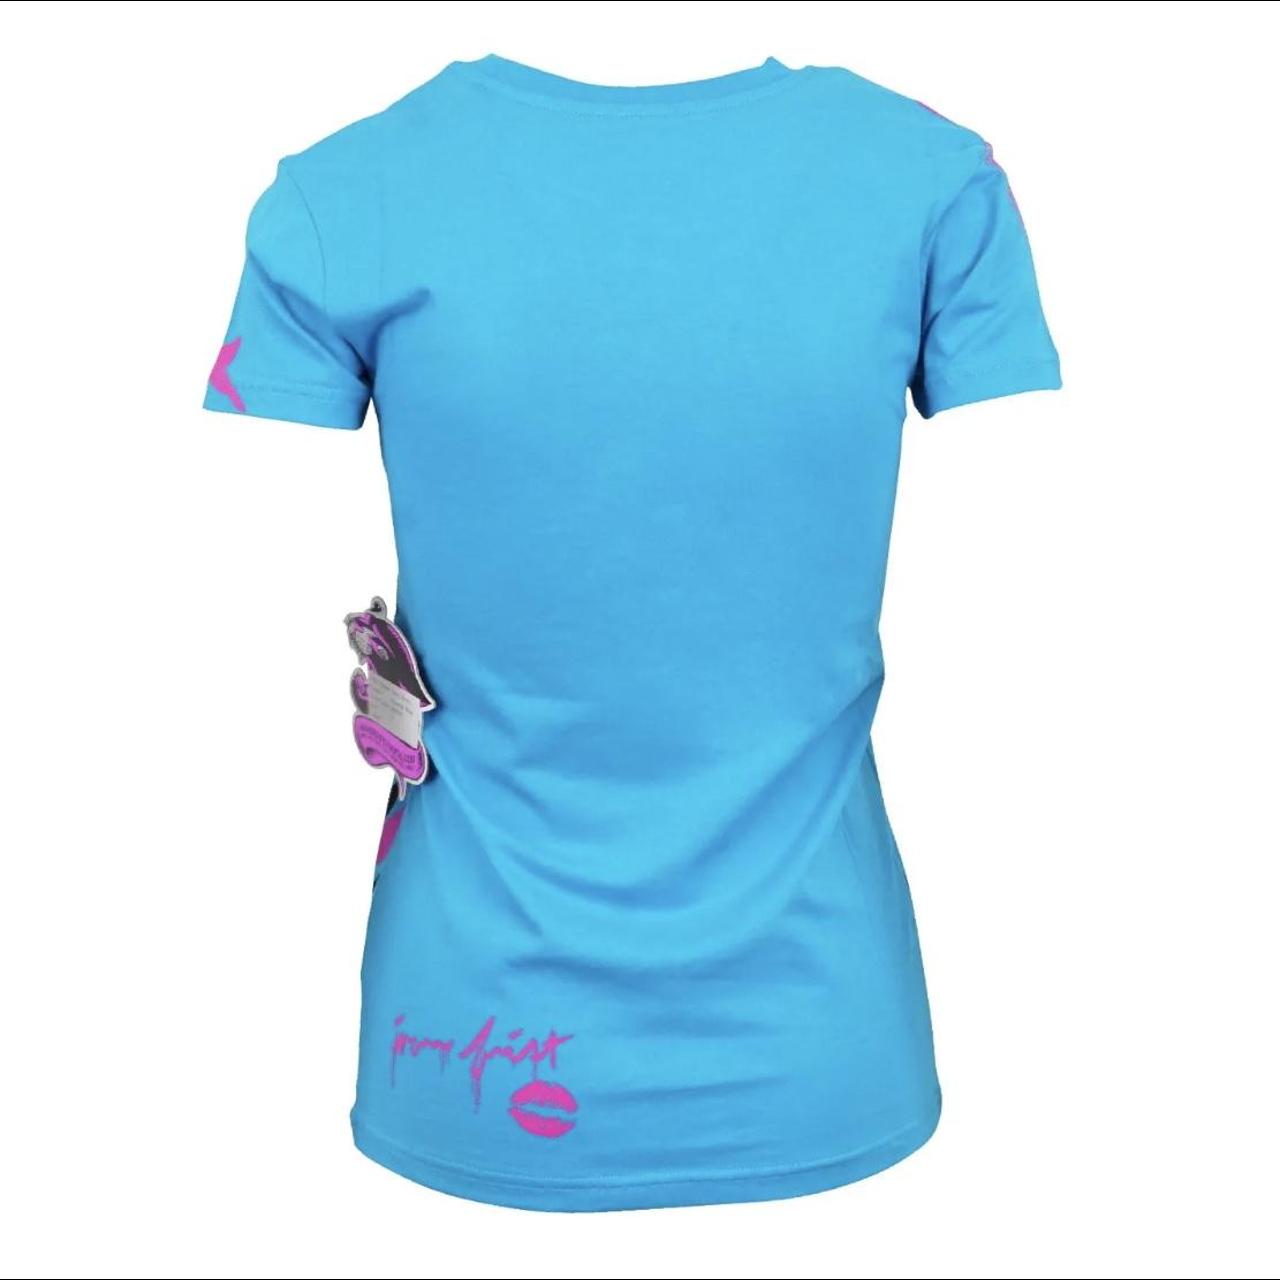 Iron Fist Women's Blue and Pink T-shirt (2)